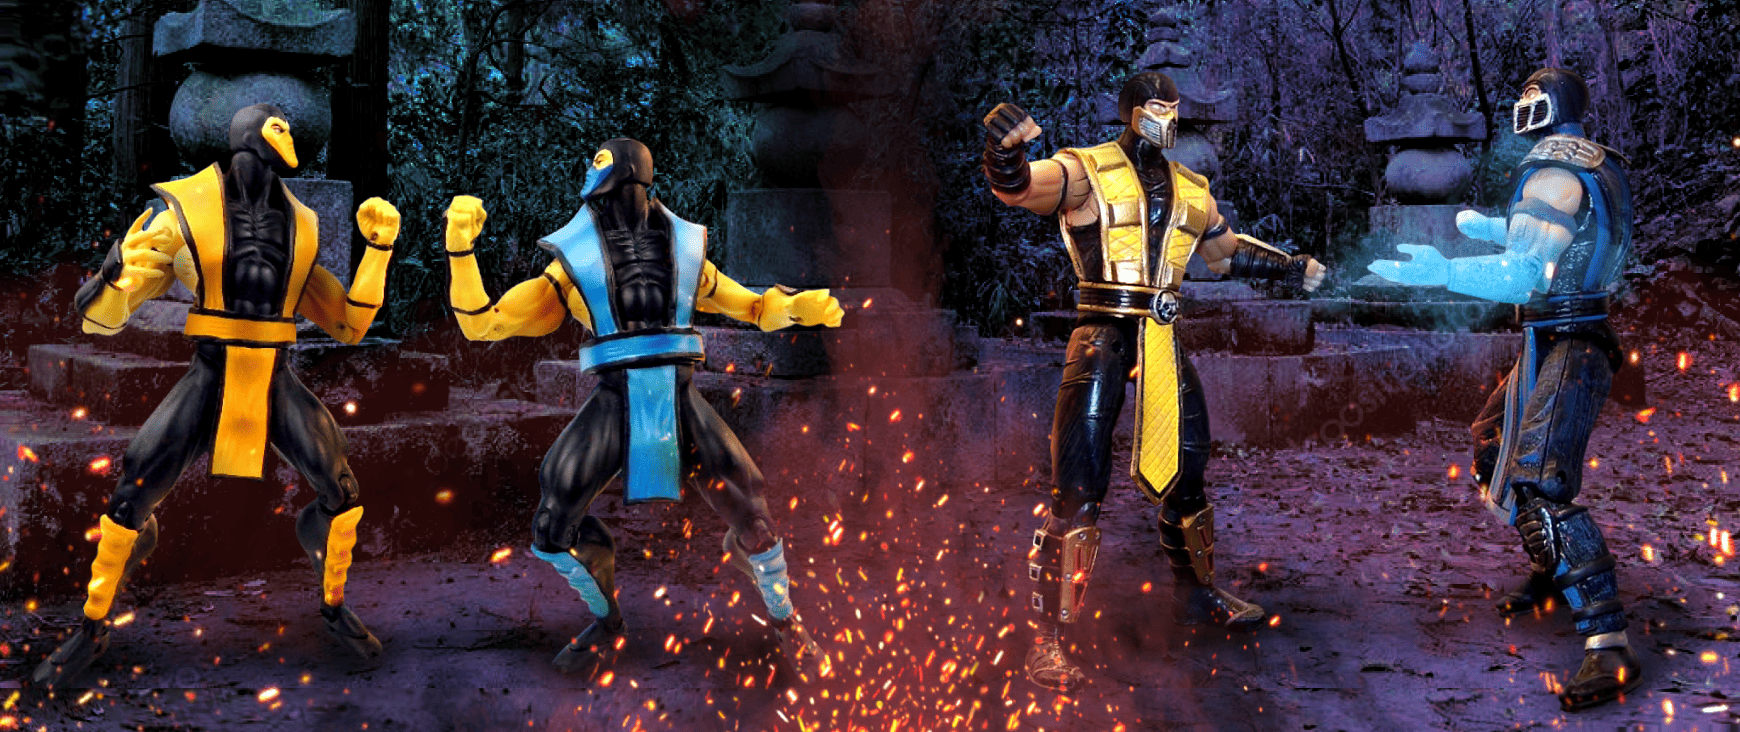 Infinite Concepts and Jazzware Mortal Kombat action figures